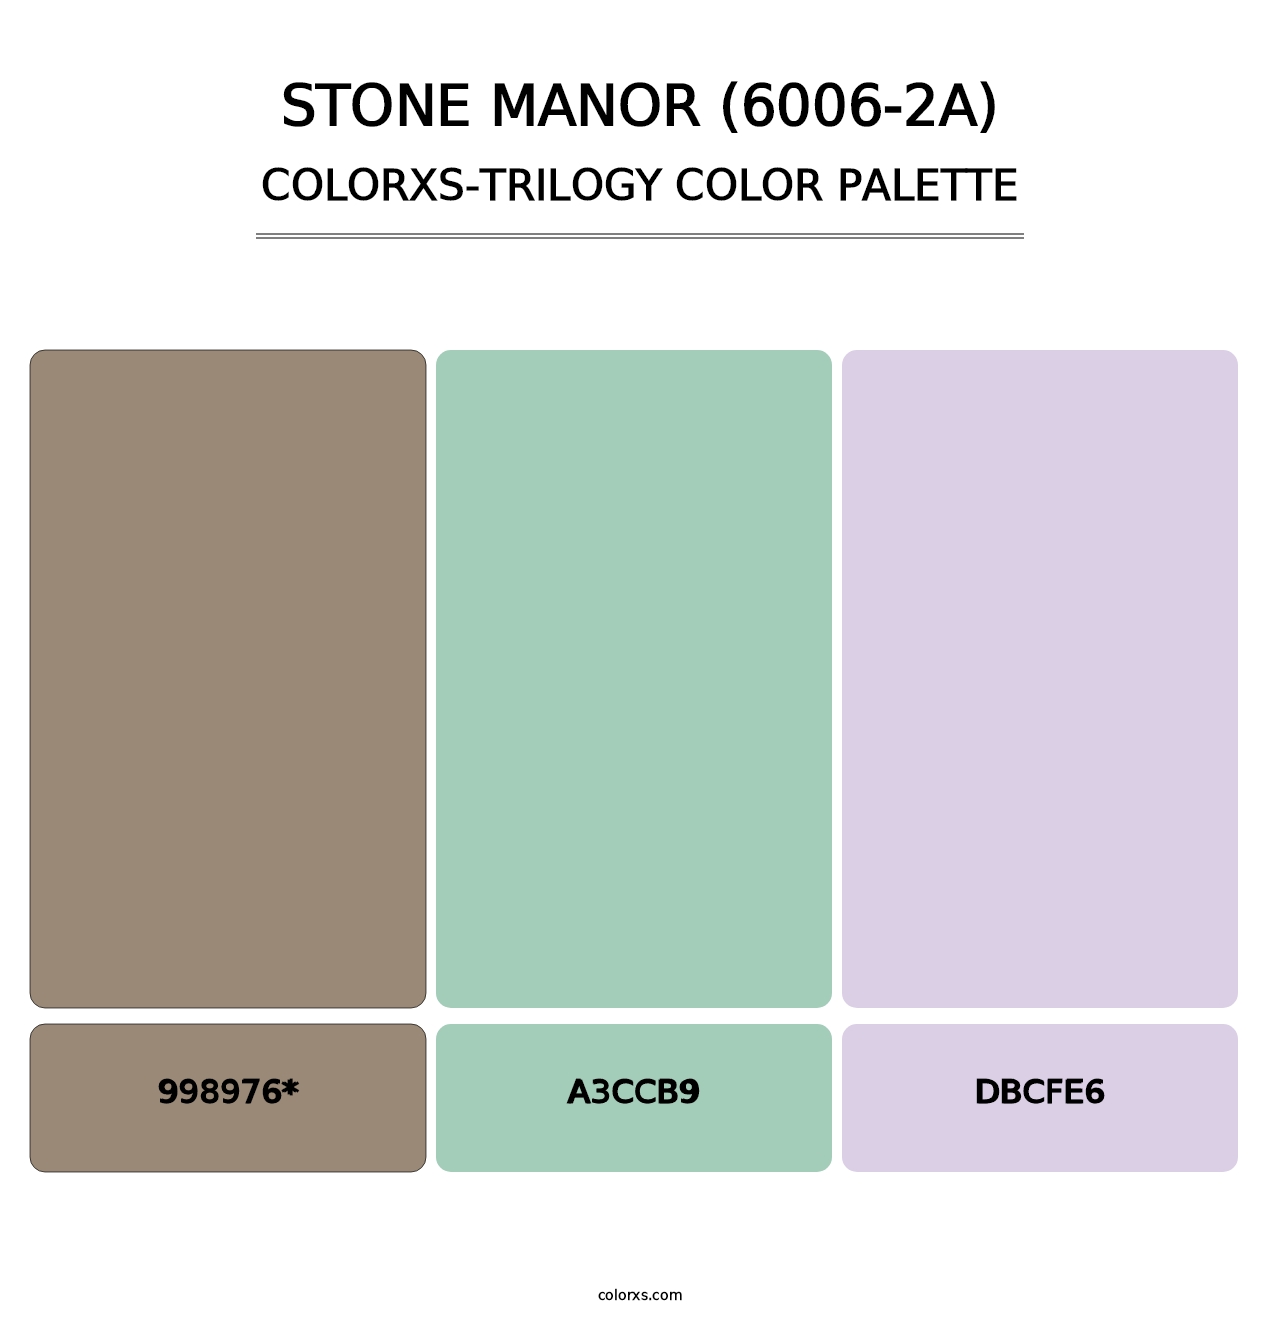 Stone Manor (6006-2A) - Colorxs Trilogy Palette